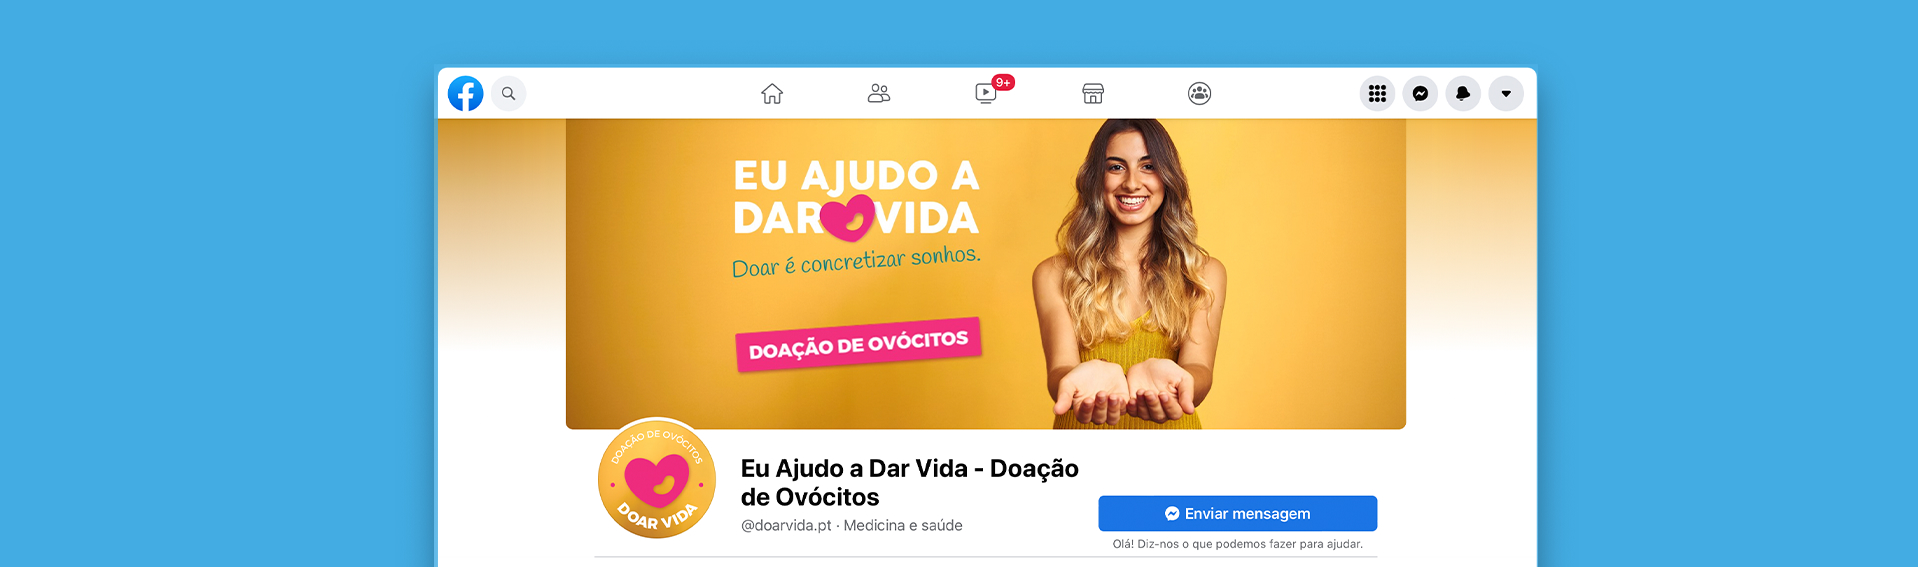 social-media-facebook-campaign-egg-donation-portugal